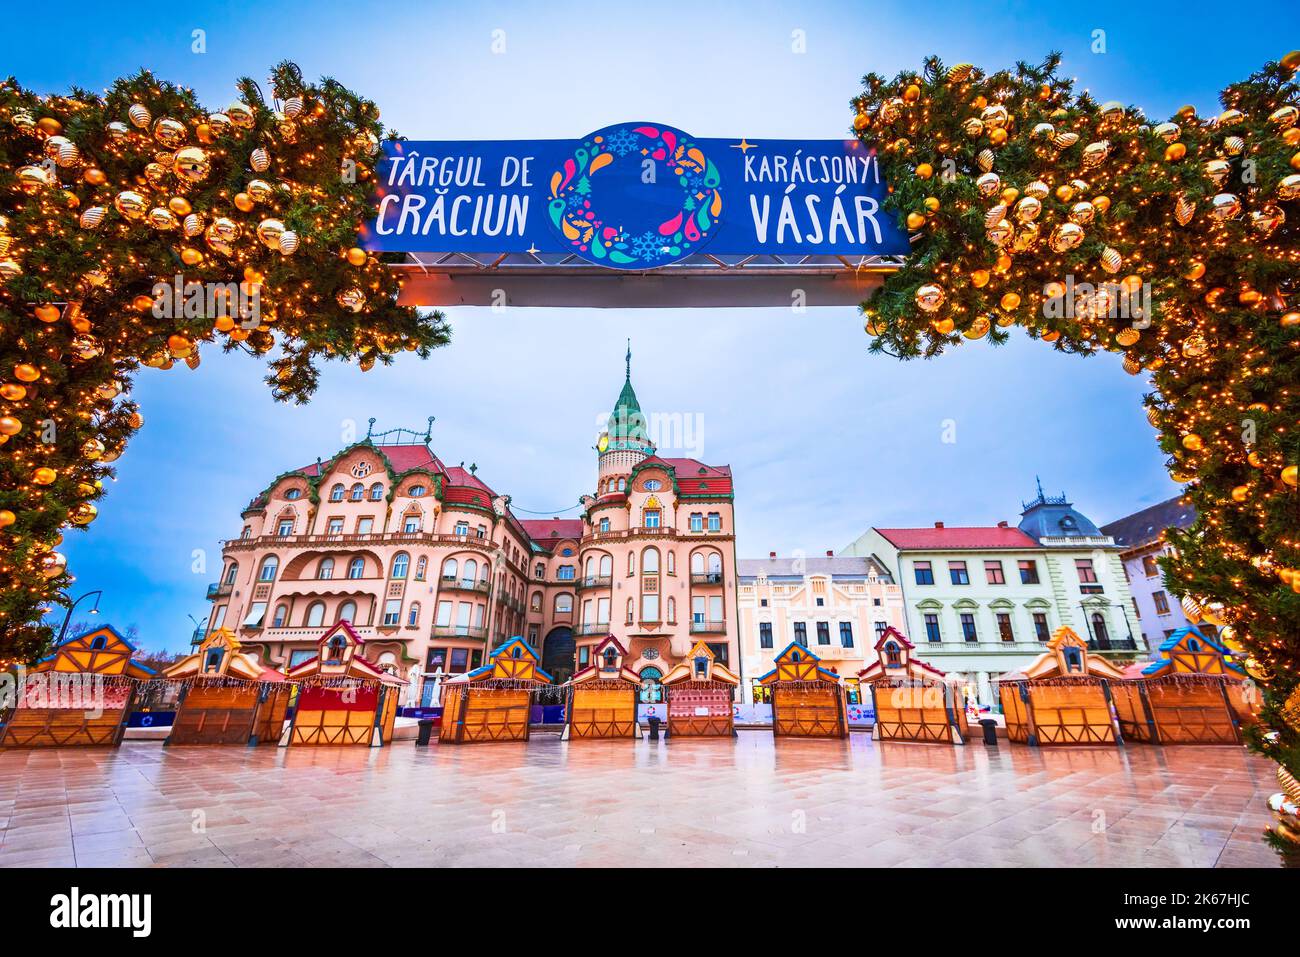 Oradea, Romania - December 2021. Christmas Market and decorations in beautiful city of Crisana - Transylvania, Eastern Europe Stock Photo